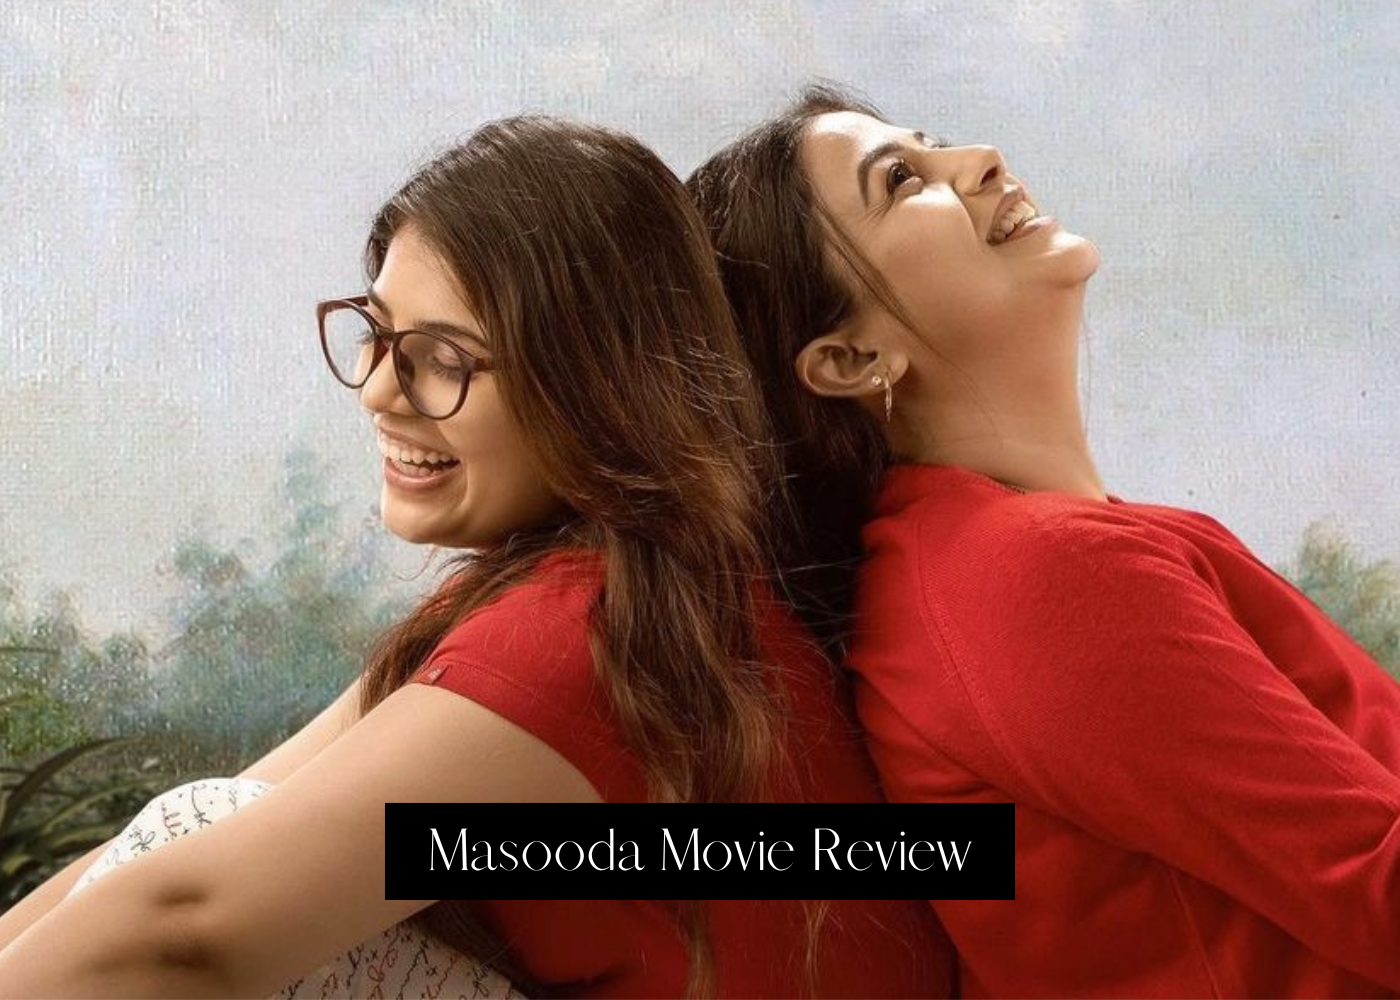 Masooda Movie Review: Masooda movie starring Sangeetha, Thiruveer, Bandhavi Sridhar, Shubalekha Sudhakar, and Akhil Ram is relased in theaters on November 18. Read the full Masooda Movie Review